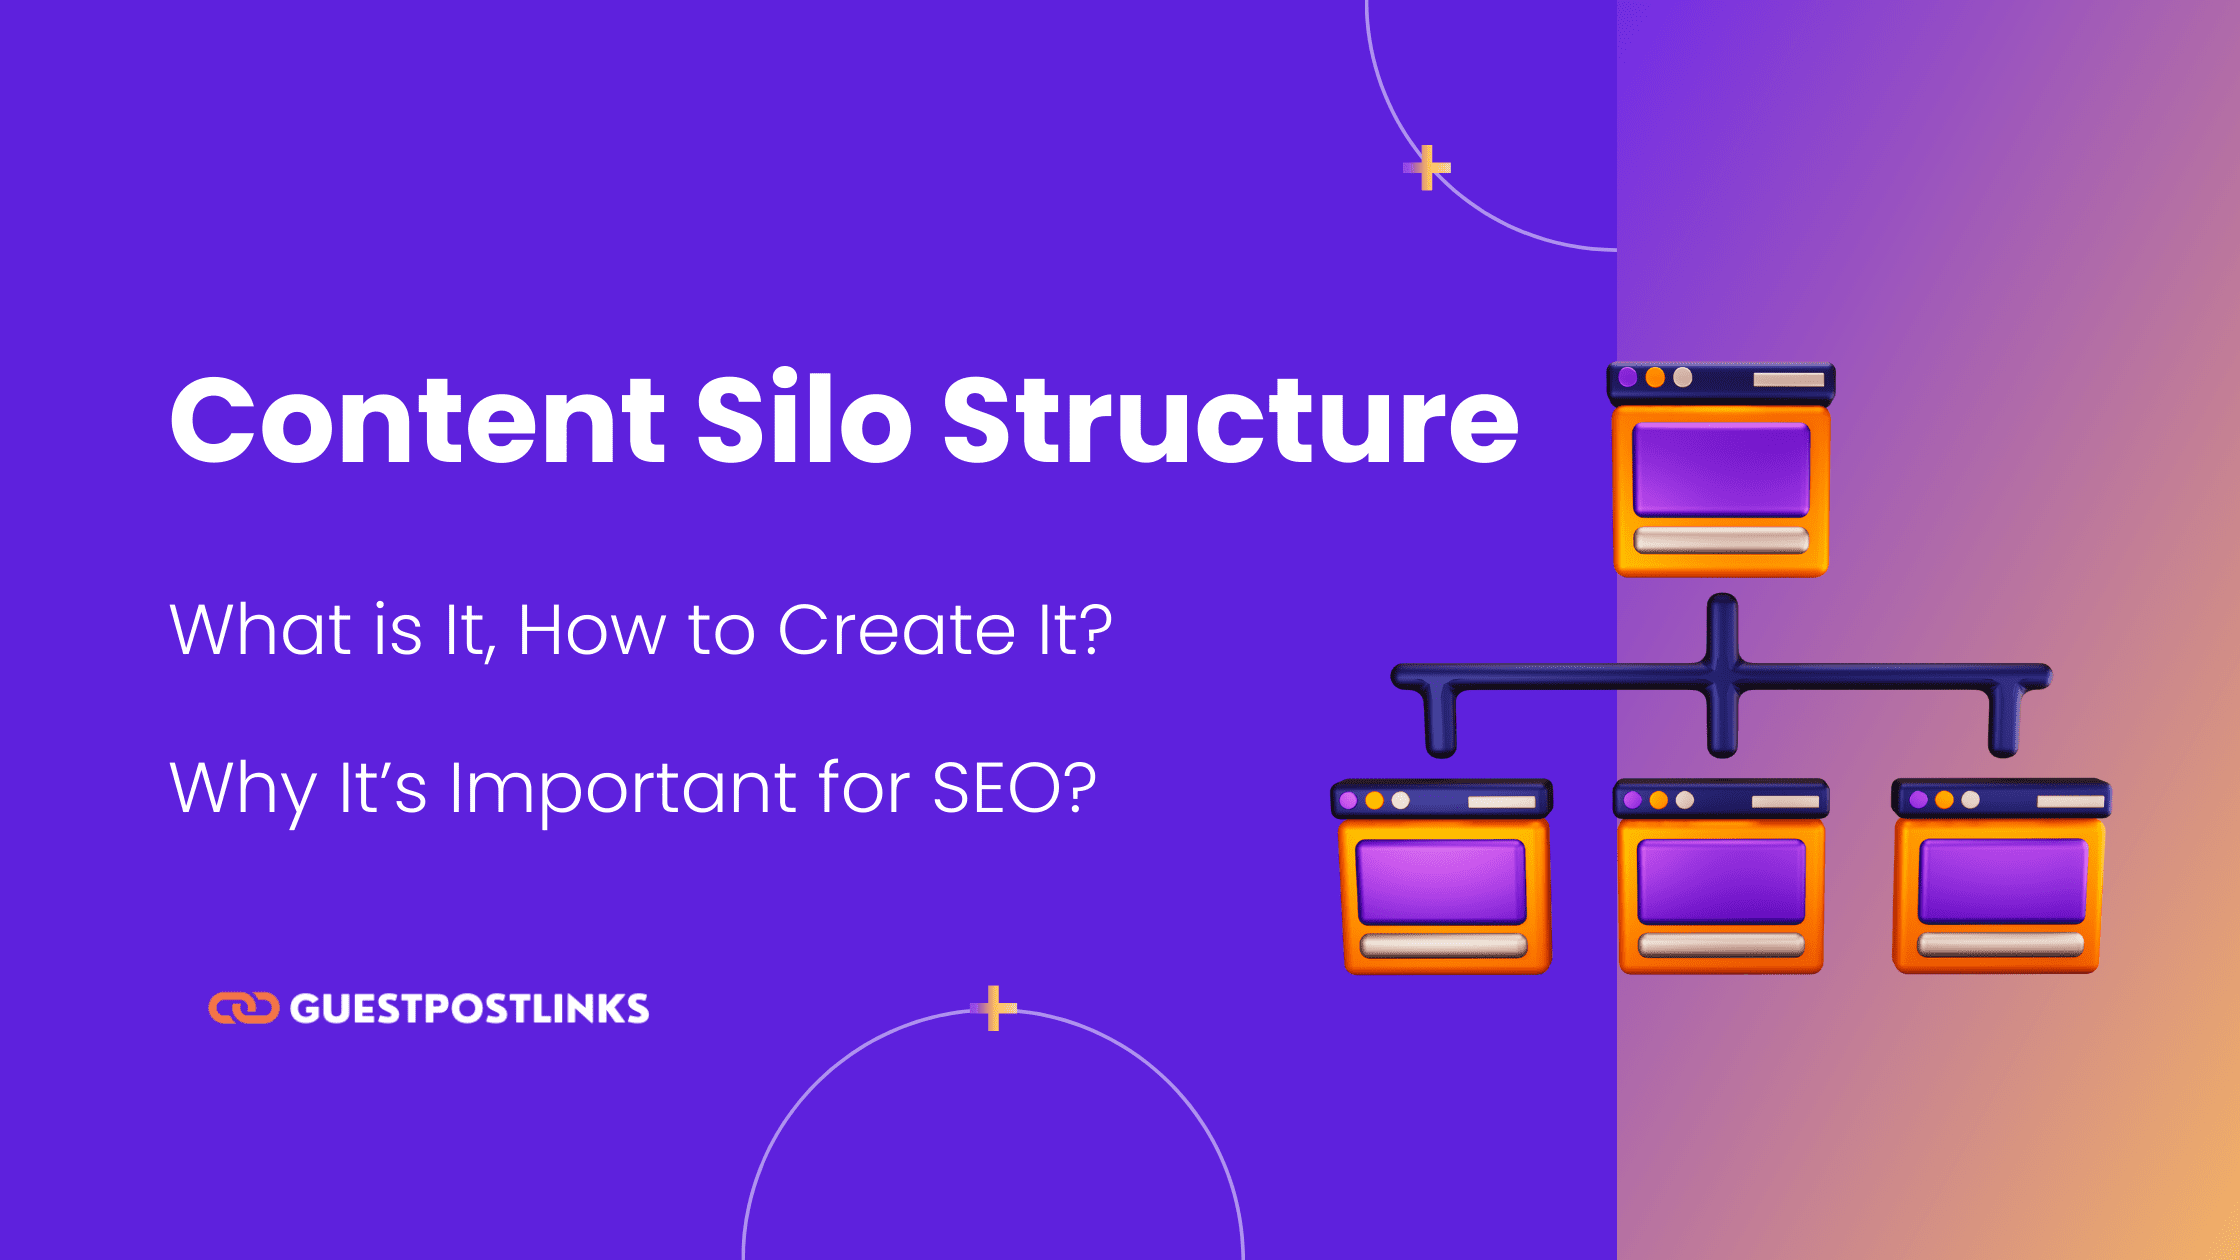 Content Silo Structure